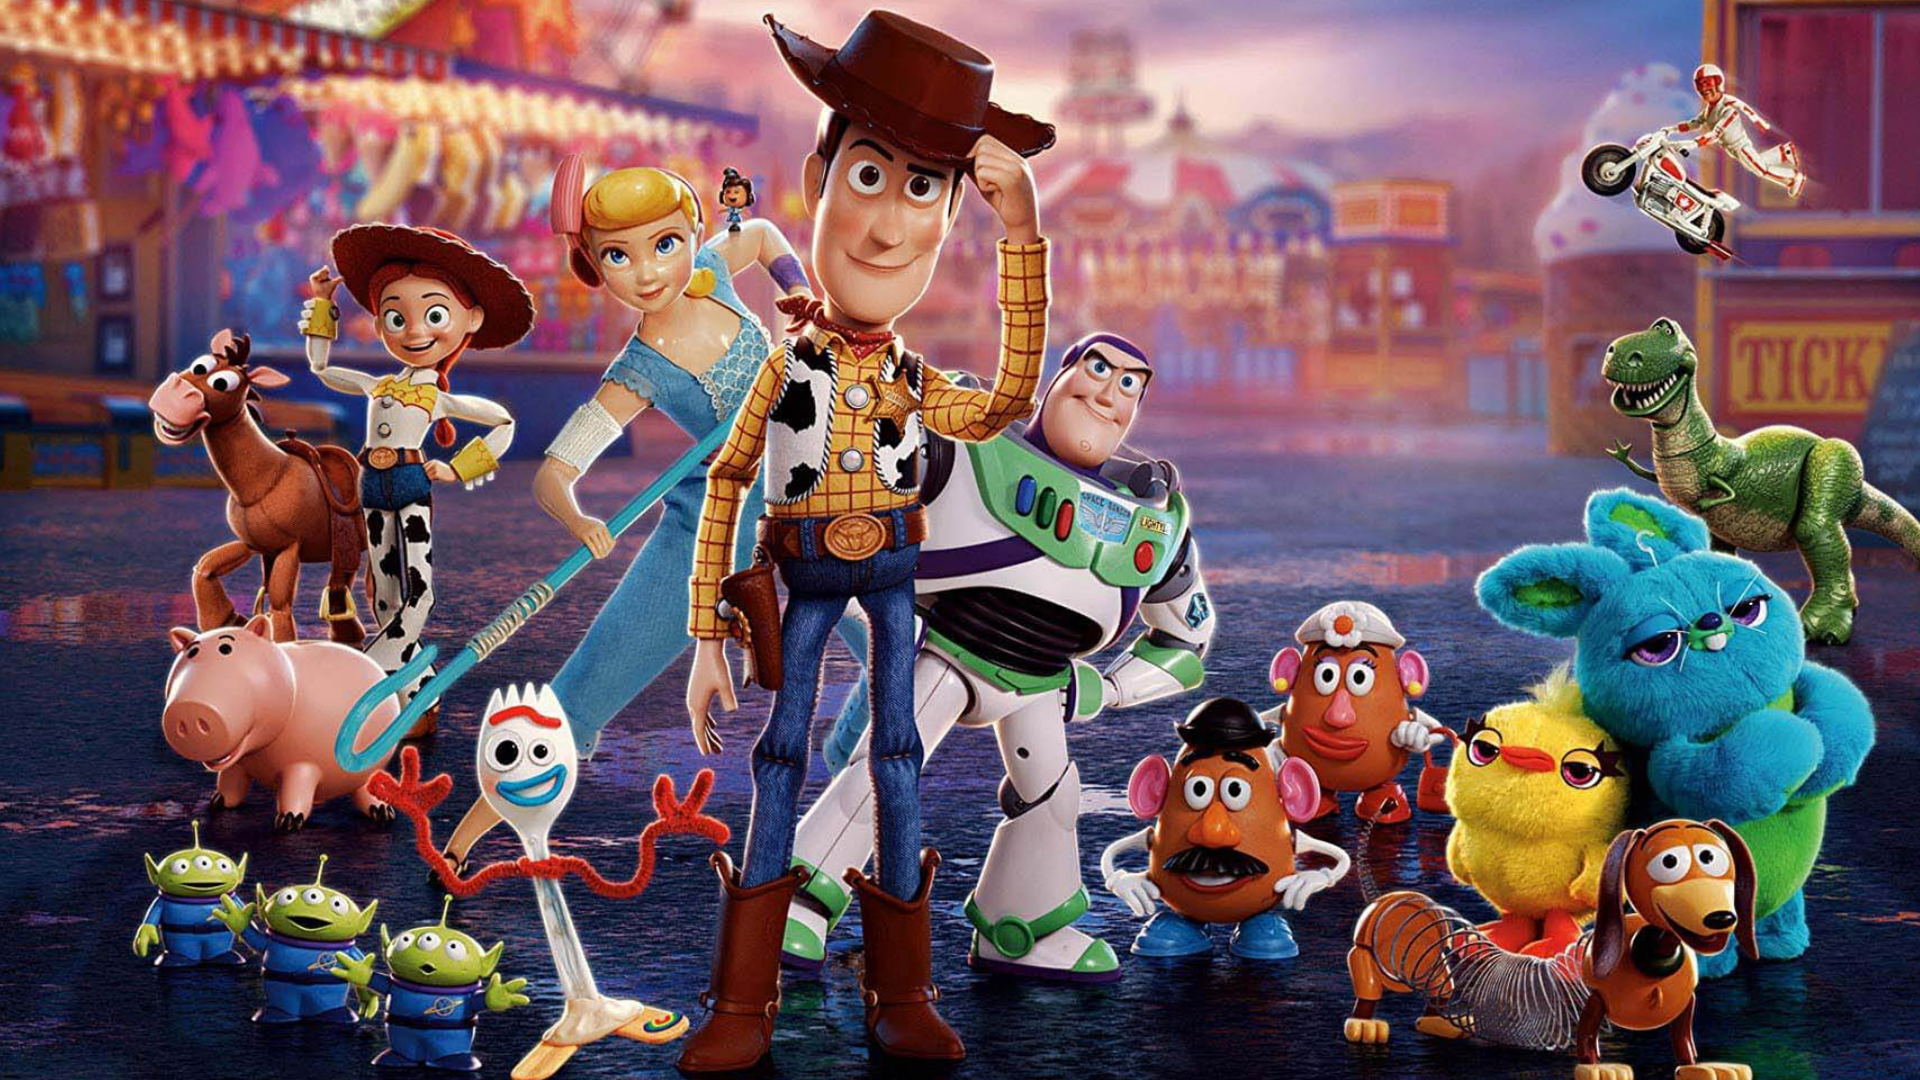 Disney anuncia produção de Frozen 3, Toy Story 5 e Zootopia 2 - Canaltech